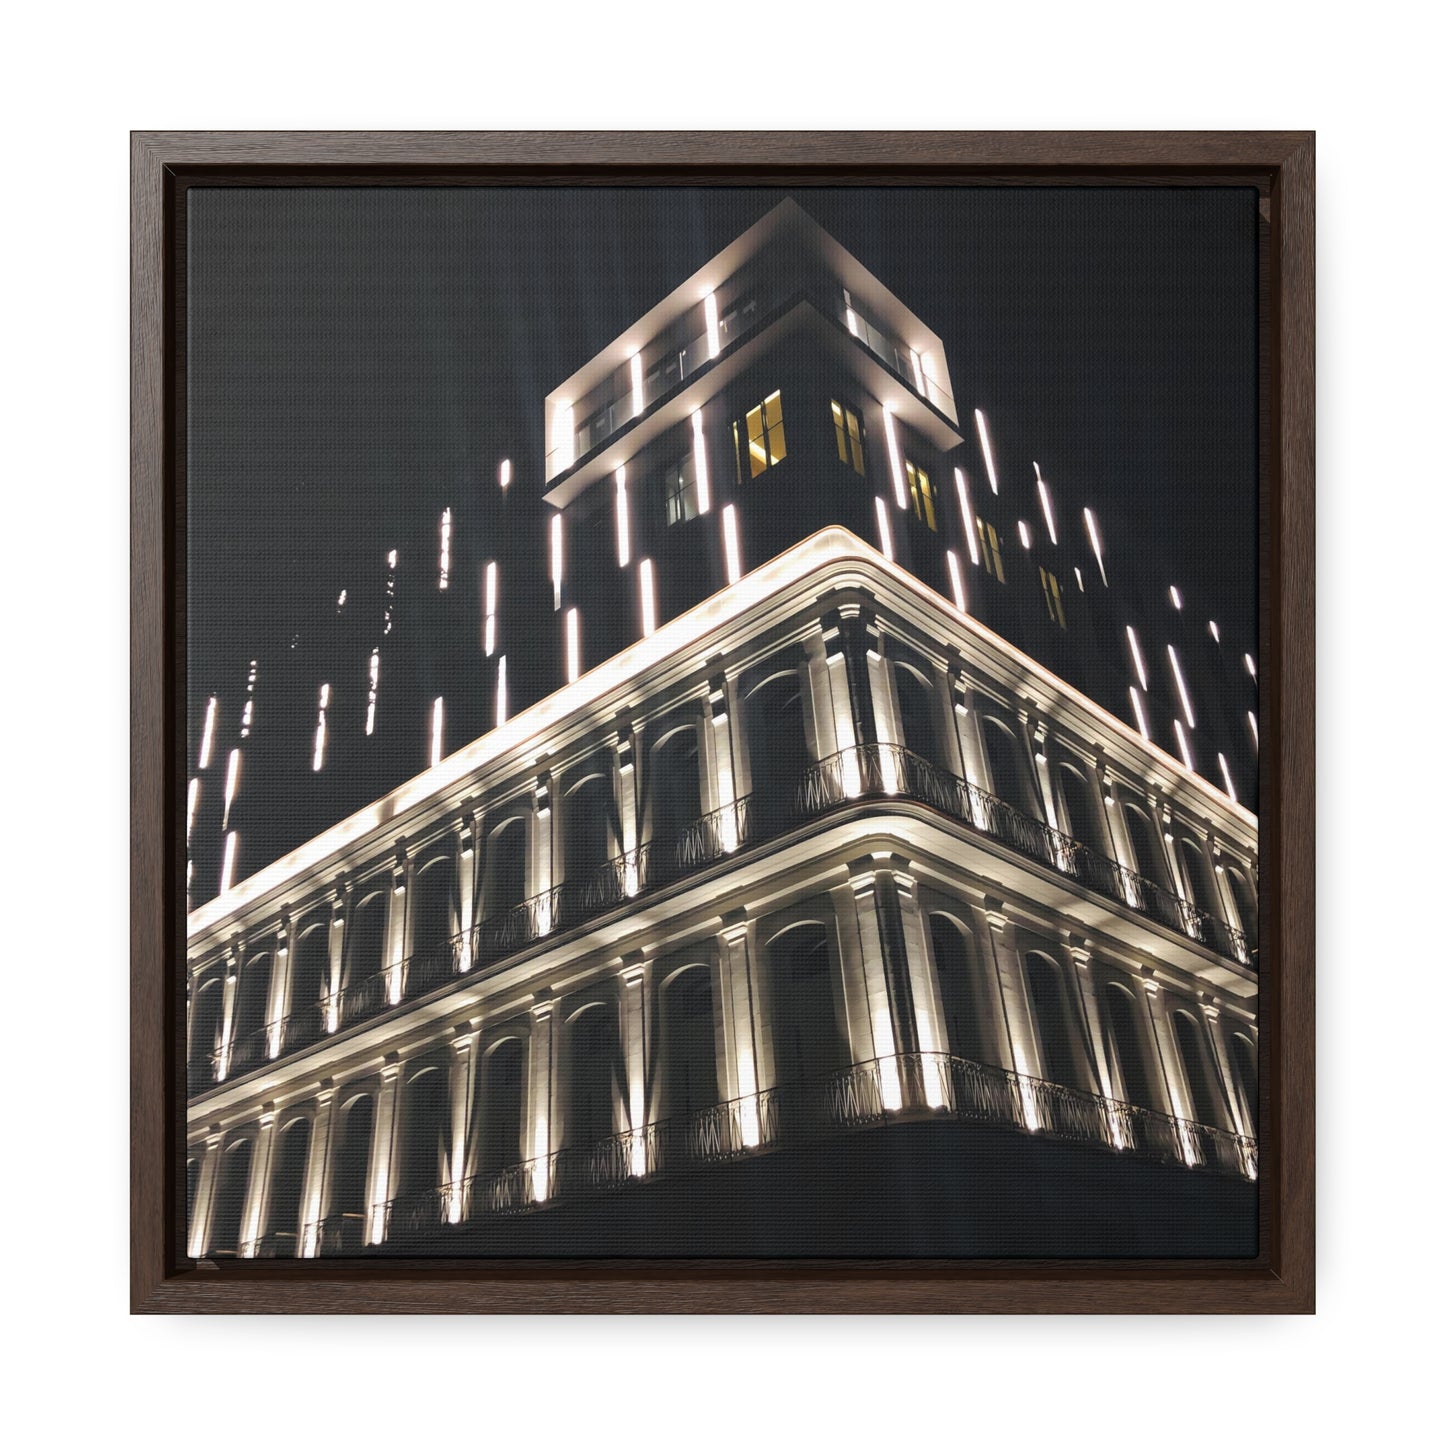 Midnight Tower - Framed Gallery Canvas